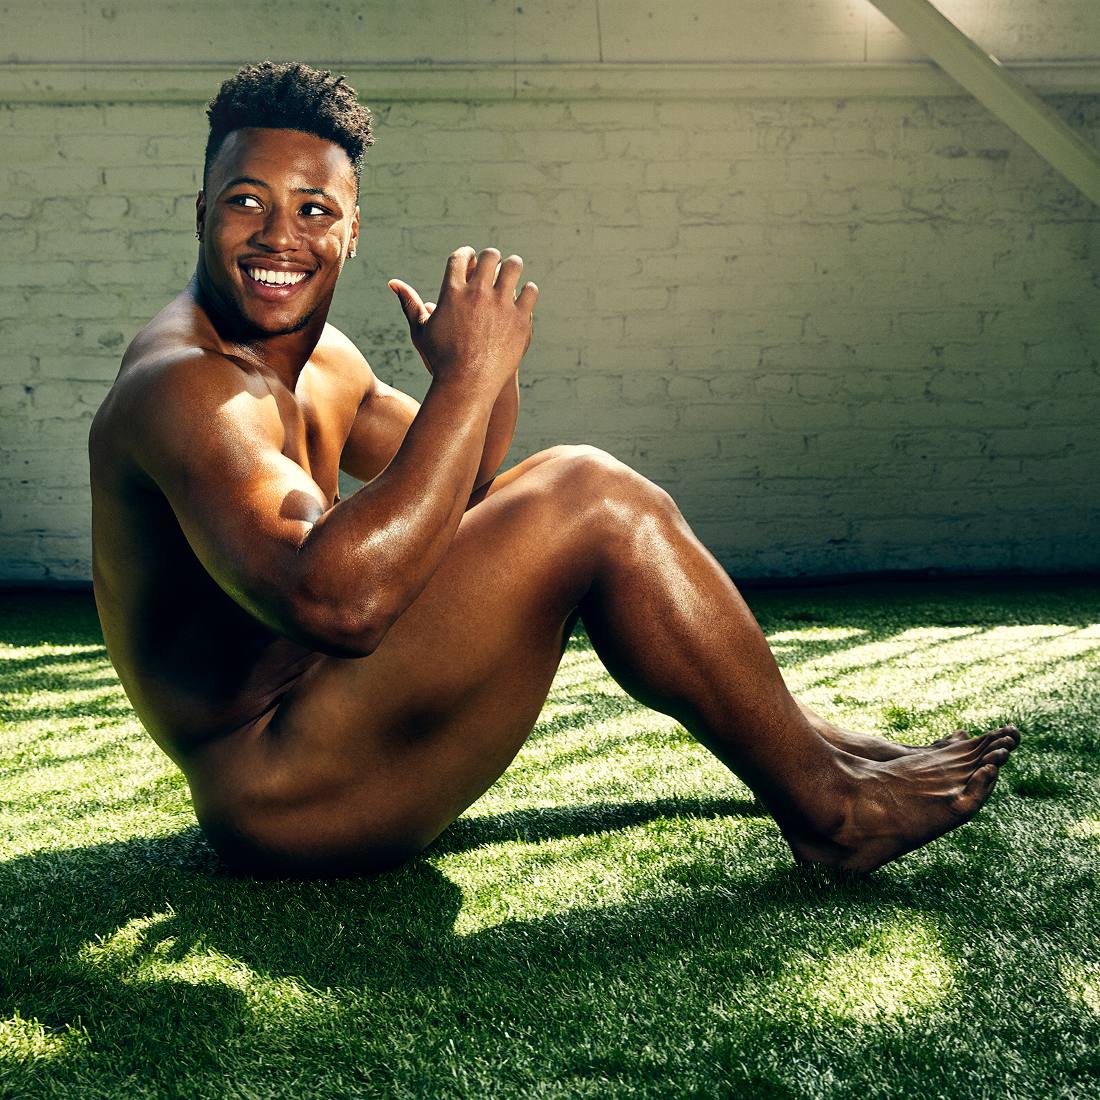 Saquon Barkley And His Massive Quads Featured In ESPN 'The Body Issue&...